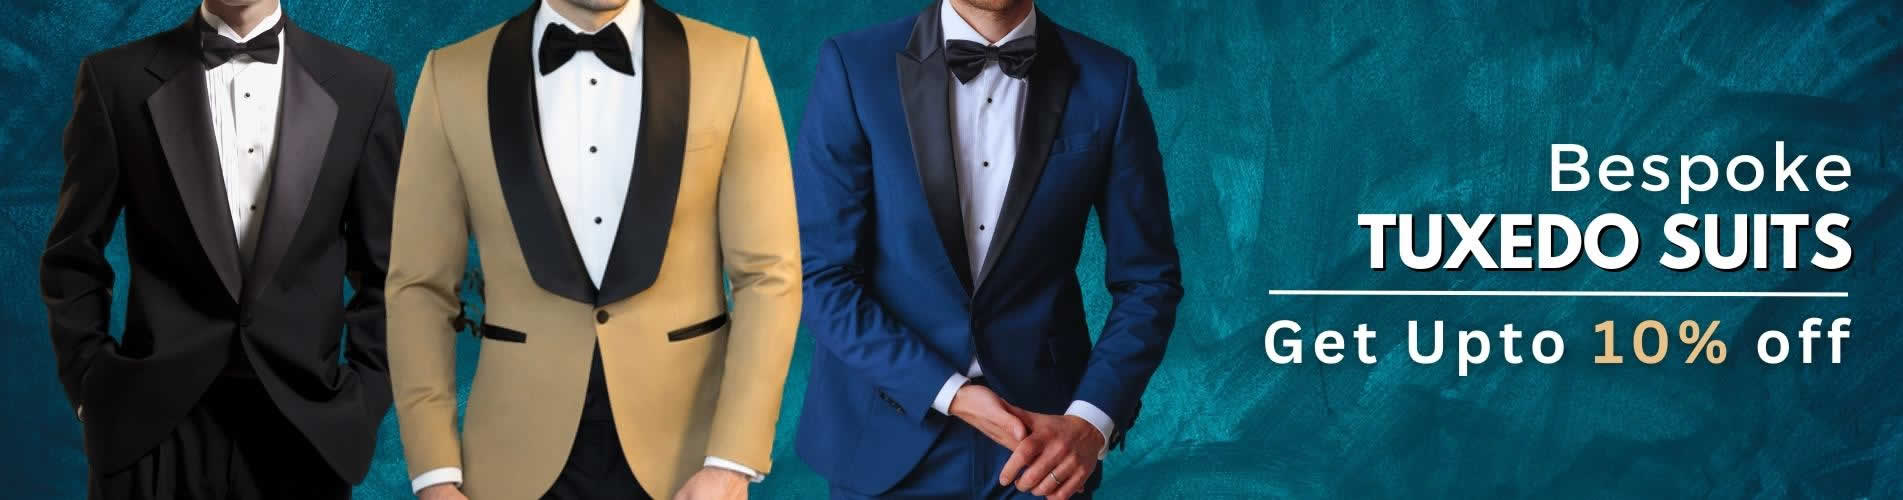 Black Business Men Suits Custom Made,Bespoke Classic Black Wedding Suit for  Men